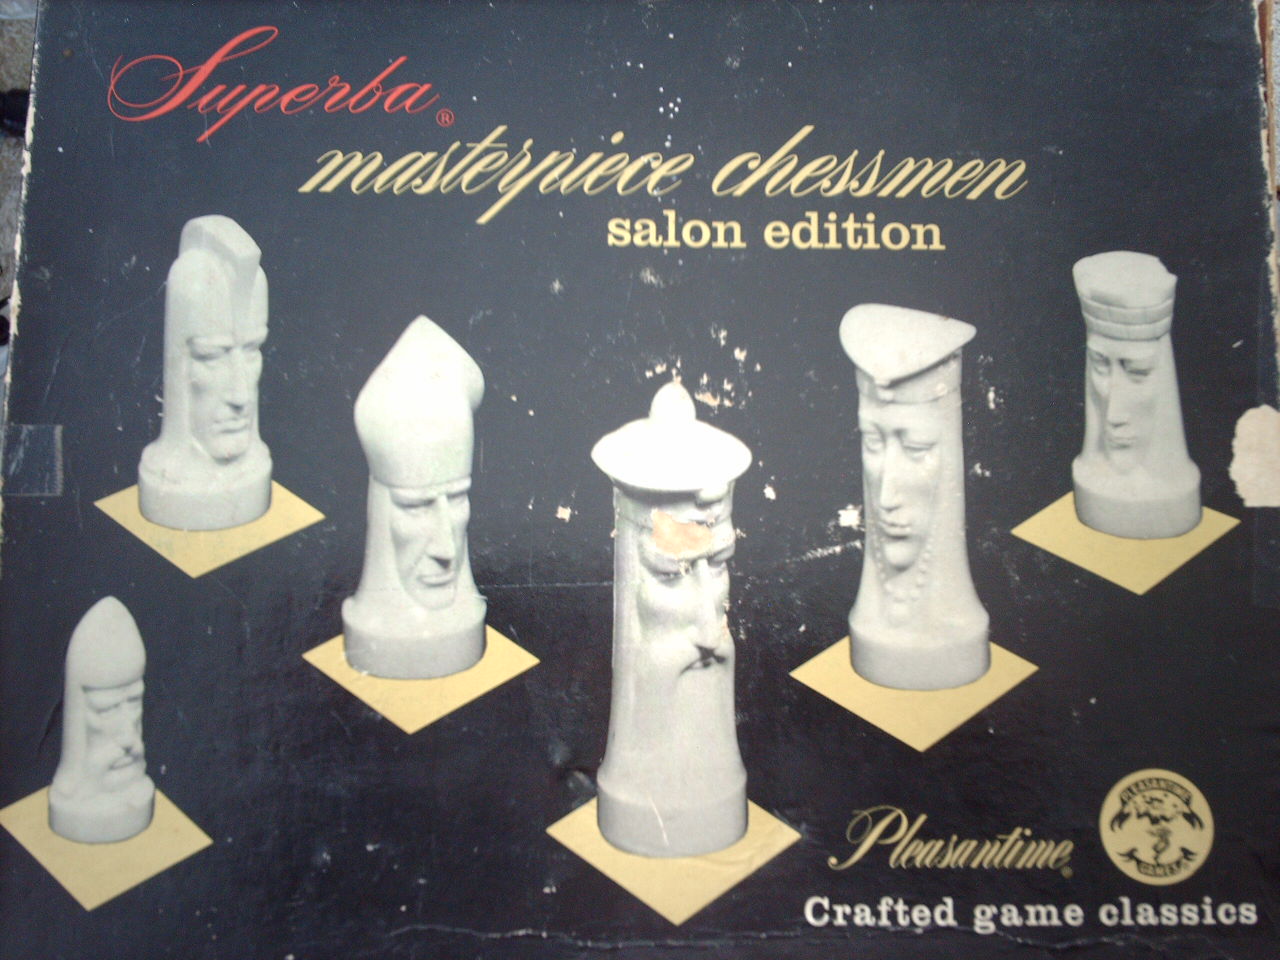 Peter Ganine Chessmen Black Rook Replacement Game Piece Superba 1475 Salon 1957 